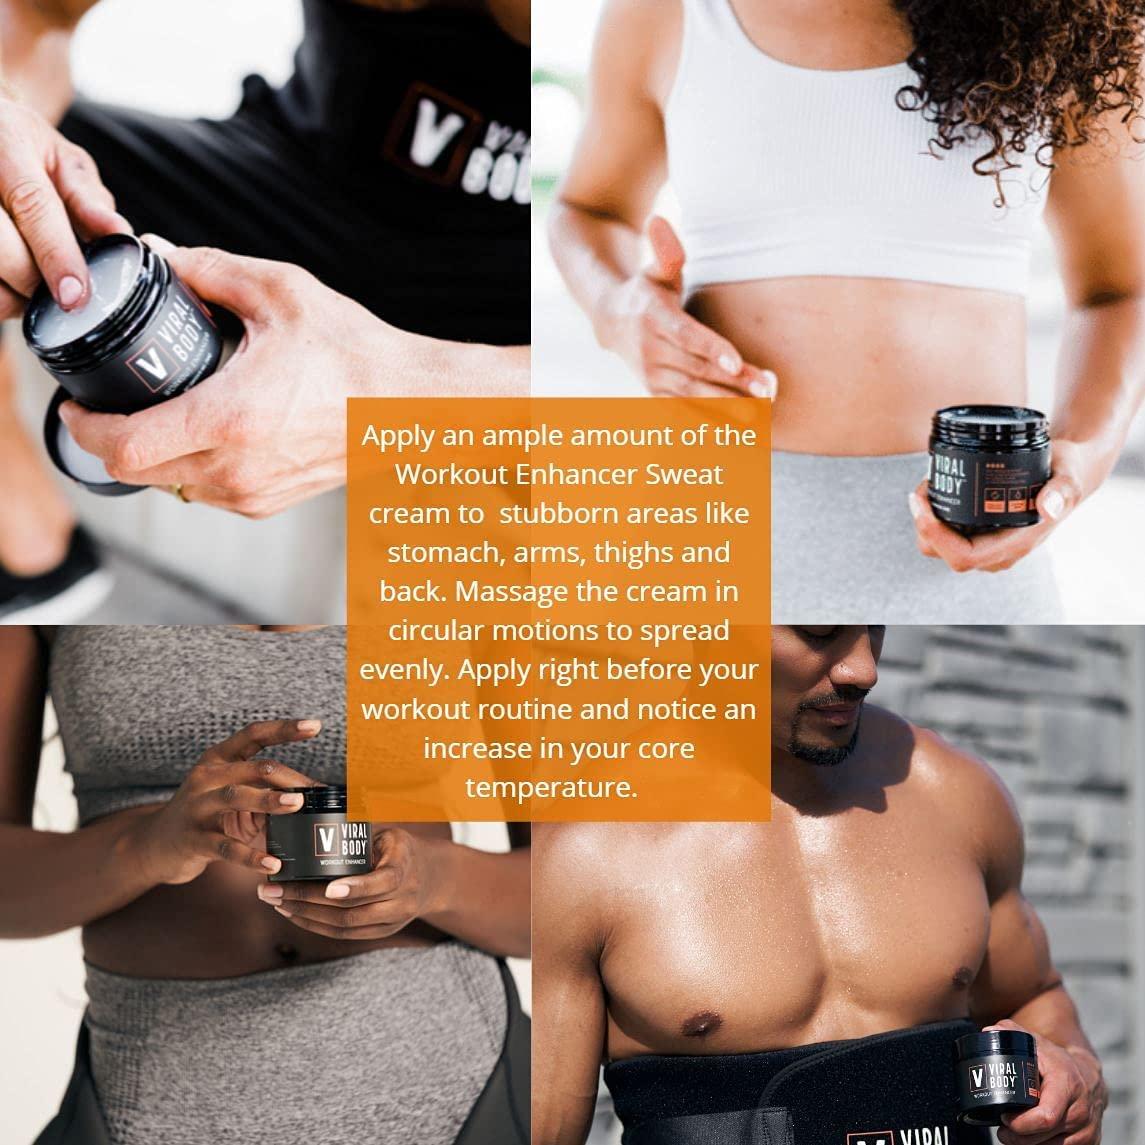 Viral Body Workout Enhancer Sweat Cream 5 Ounce Jar Thermogenic Heat Gel  Sweat Faster Maximize Workout Improve Cardio